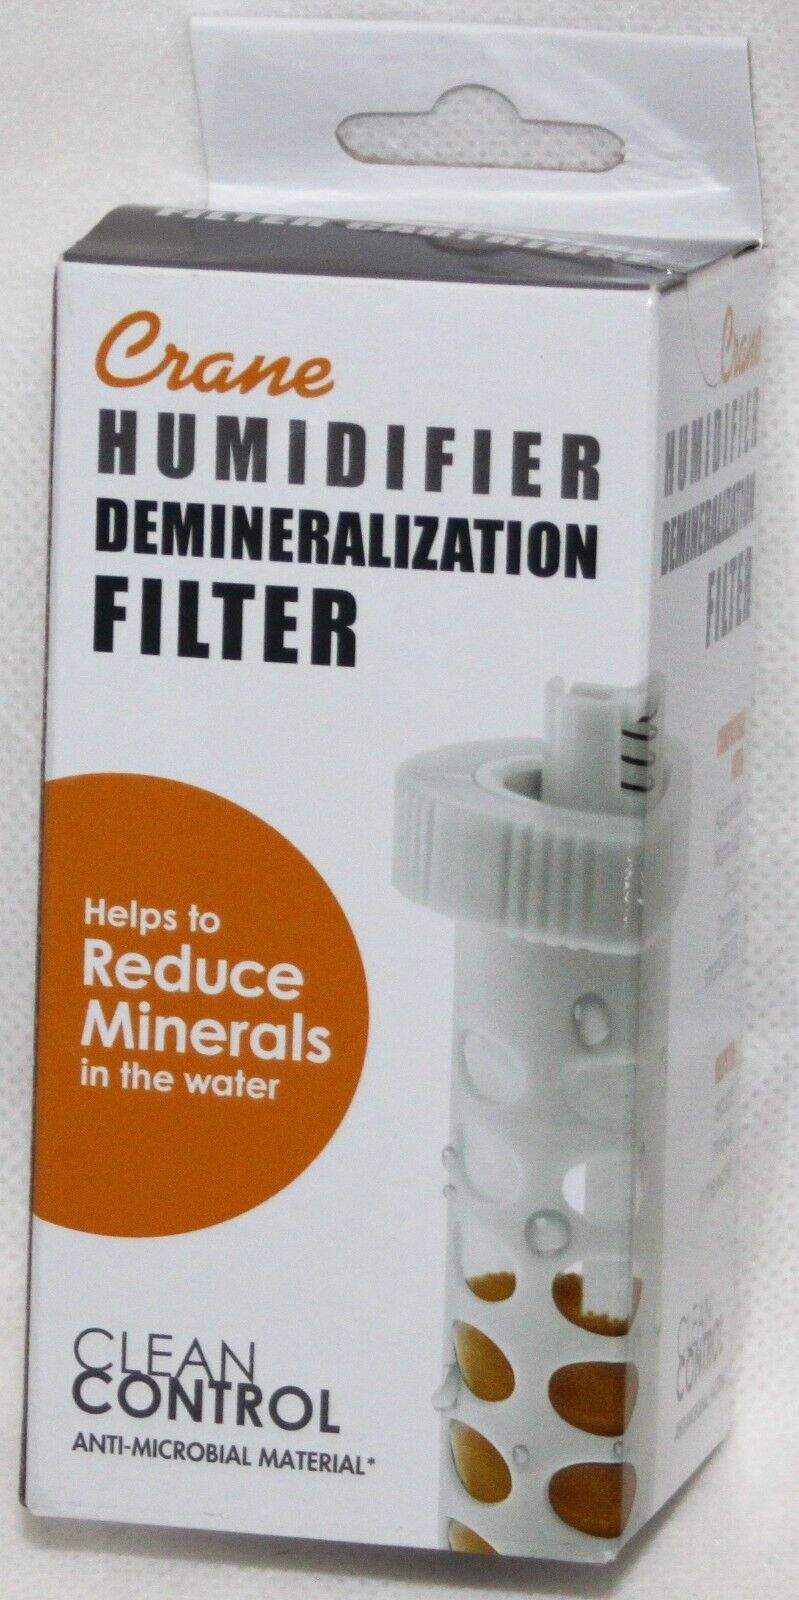 OEM Genuine Crane Humidifier Demineralization Filter Clean Control HS-1932 - $12.30